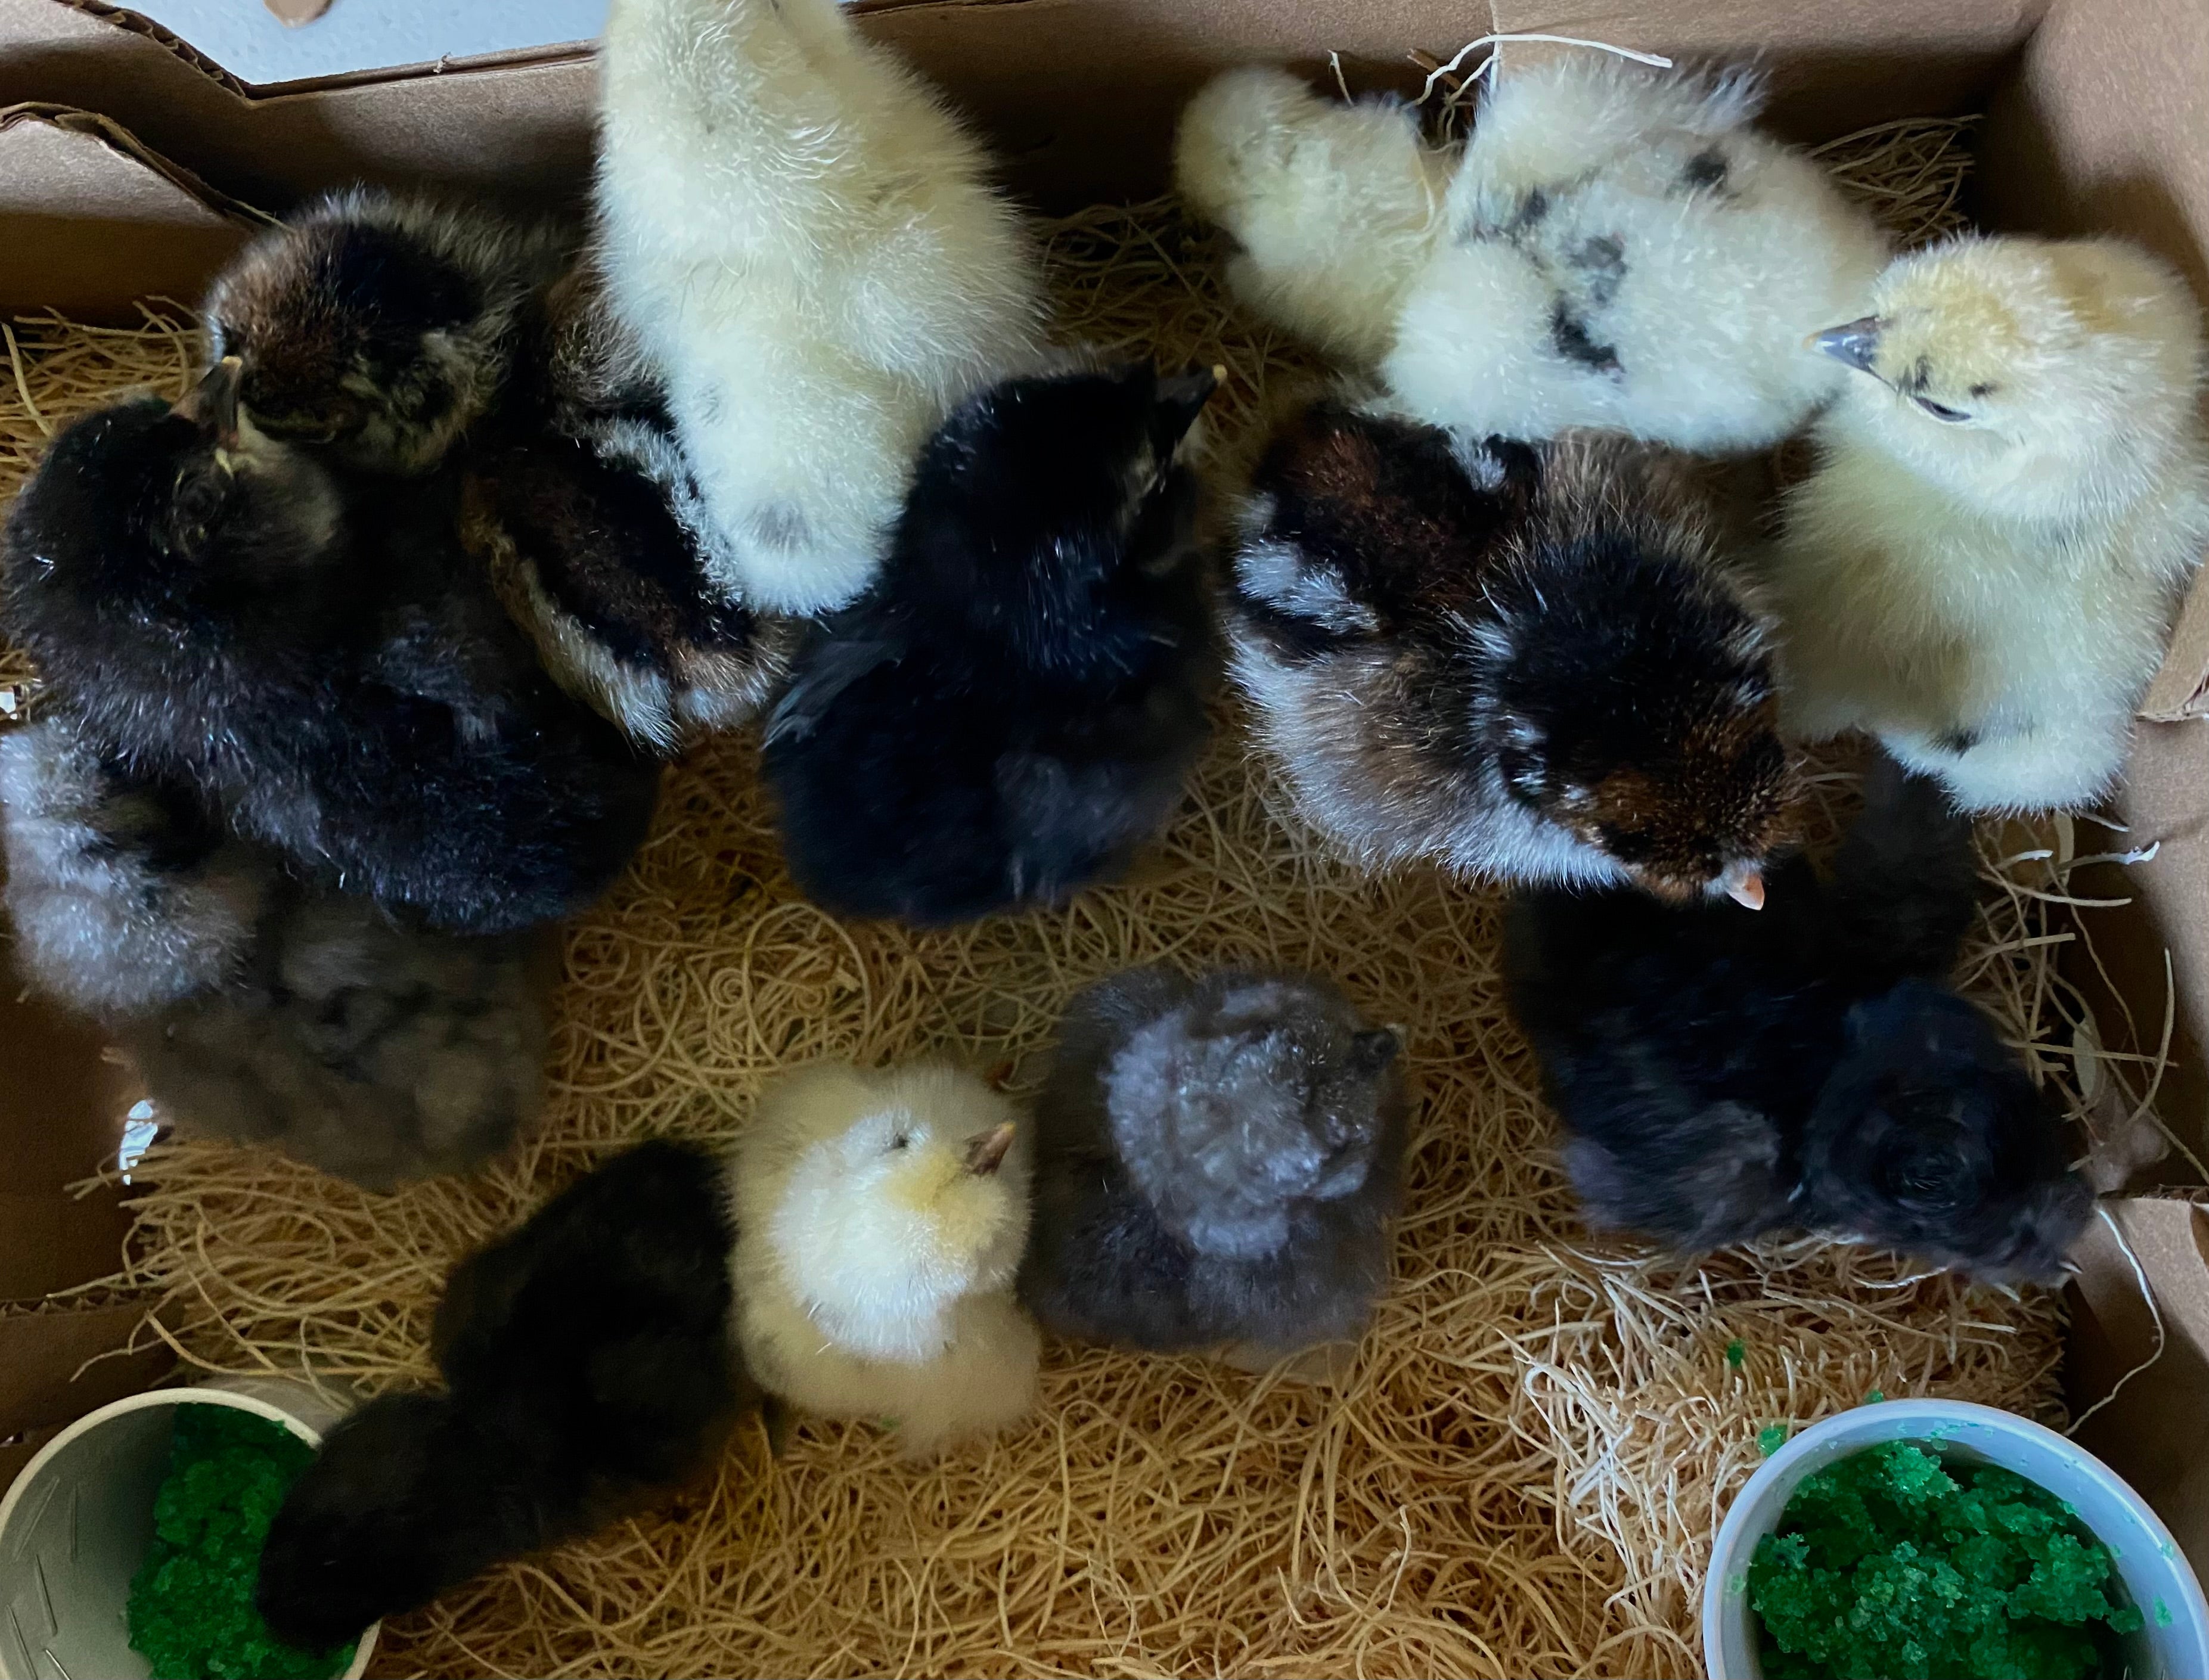 Surprise Box of 15 Chicks